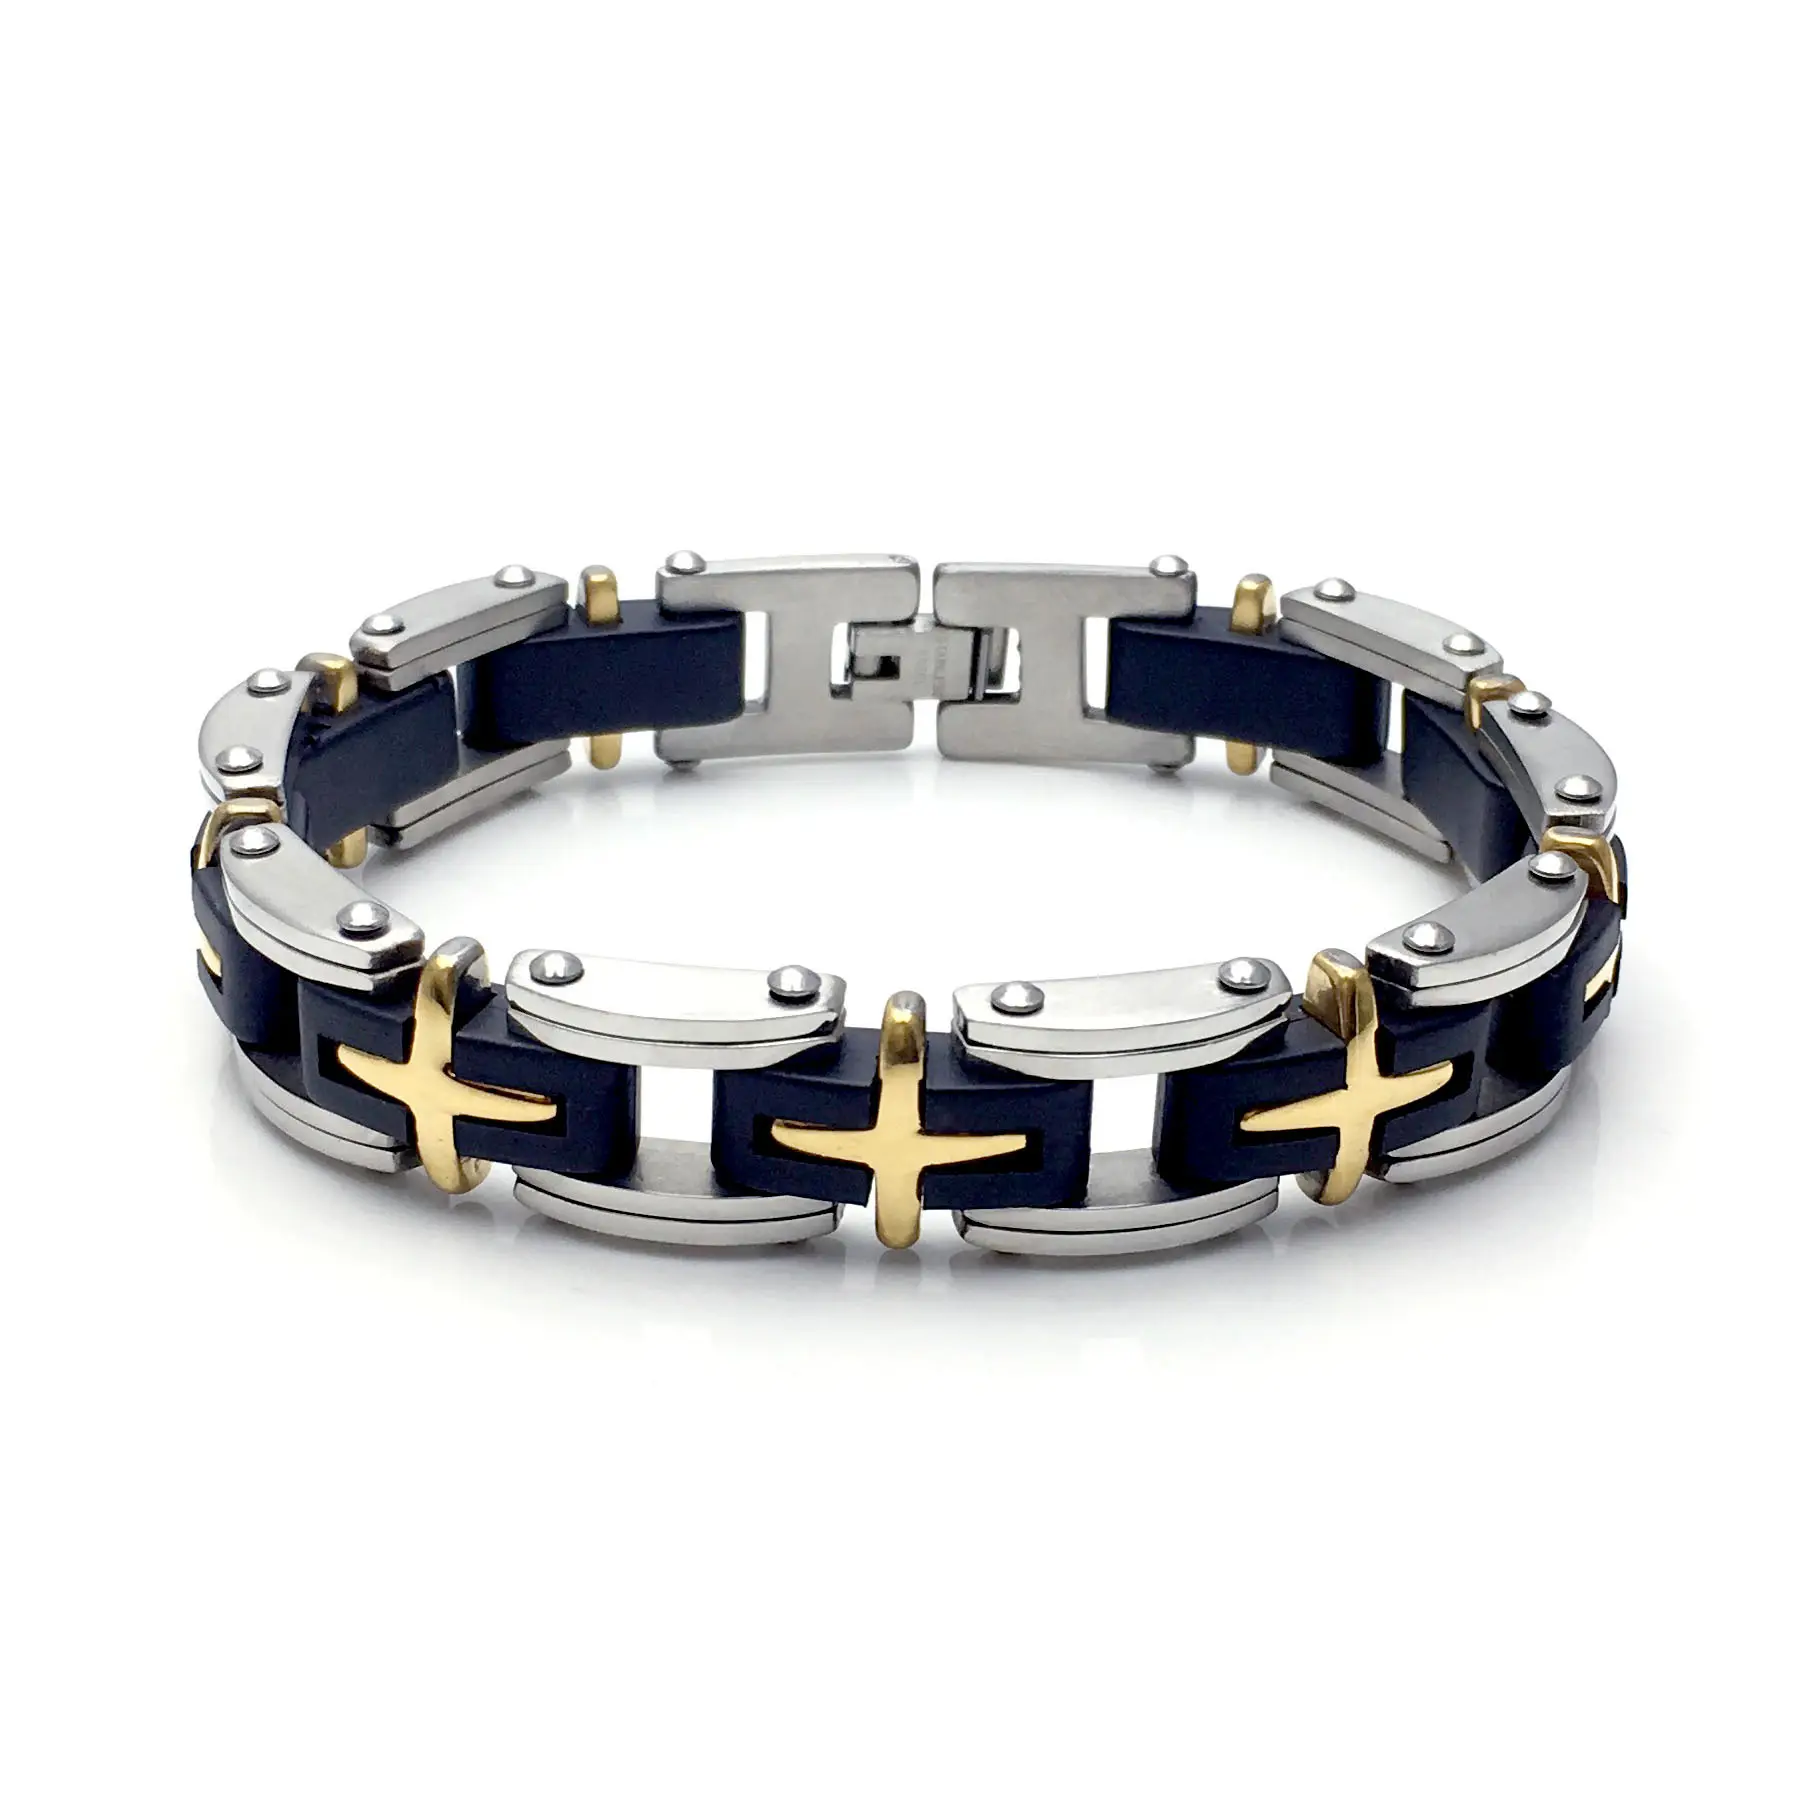 Religiös hohe Qualität 316L Edelstahl Gummi schwarz Silikon Gold Silber Kreuz Mode Schmuck Armband Armreif Herren